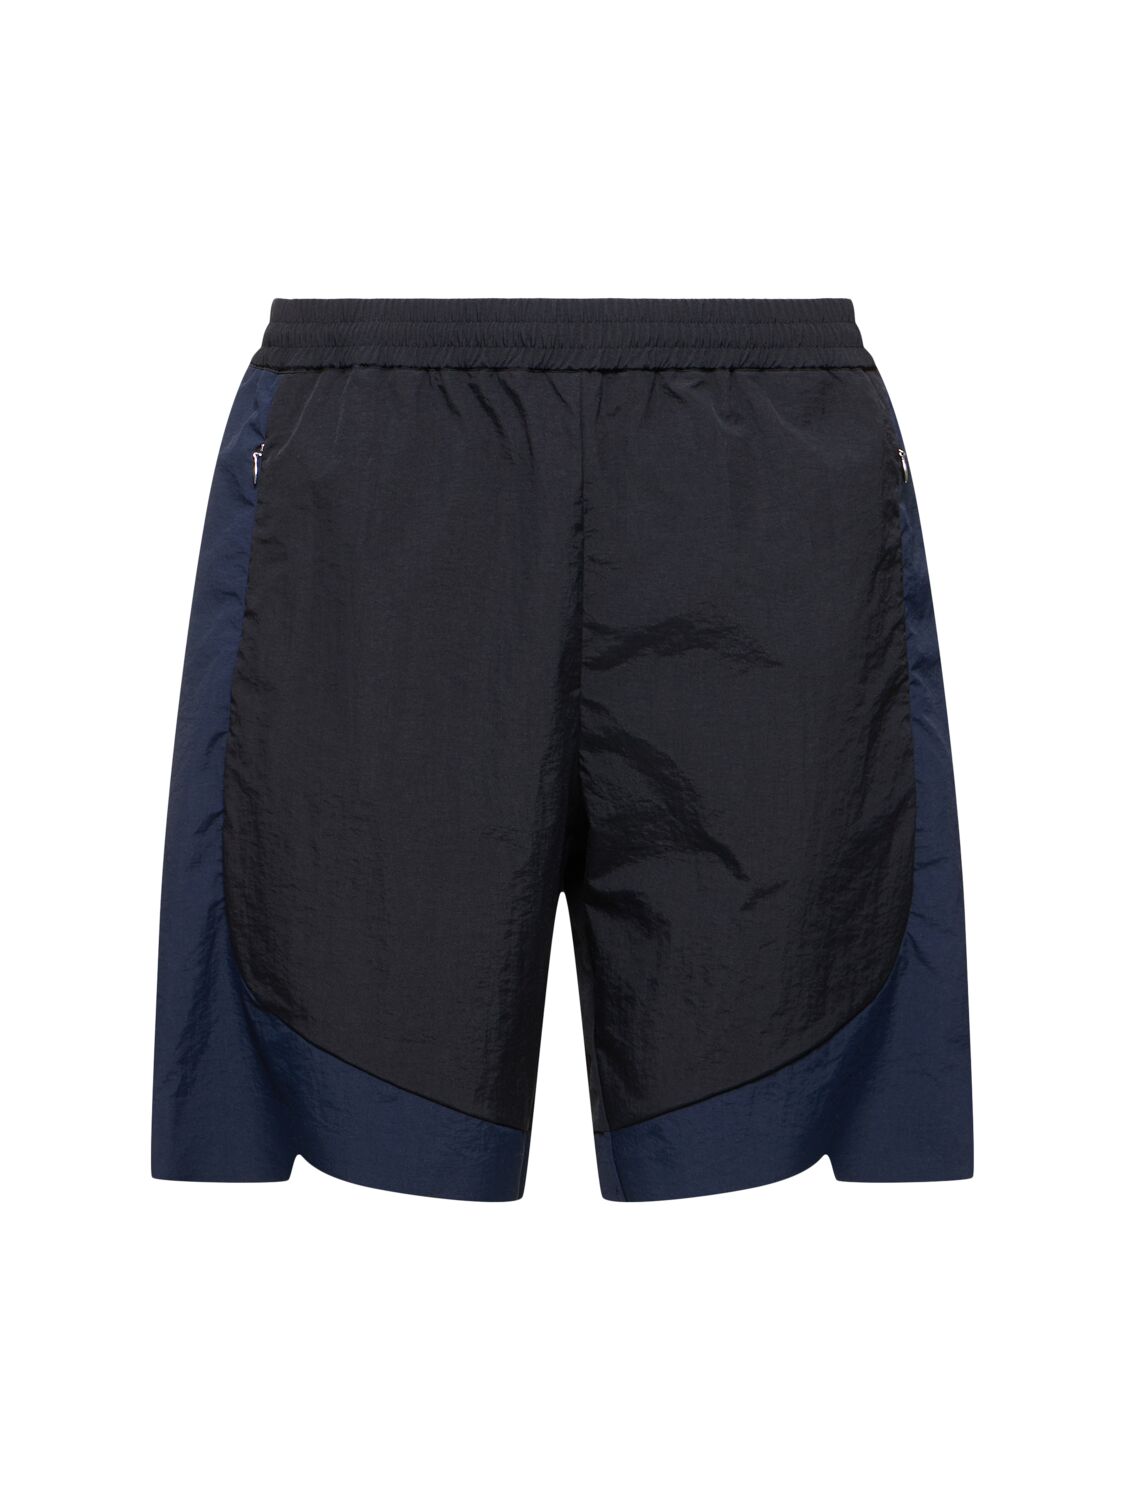 J.L-A.L Ultralight Nylon Shorts